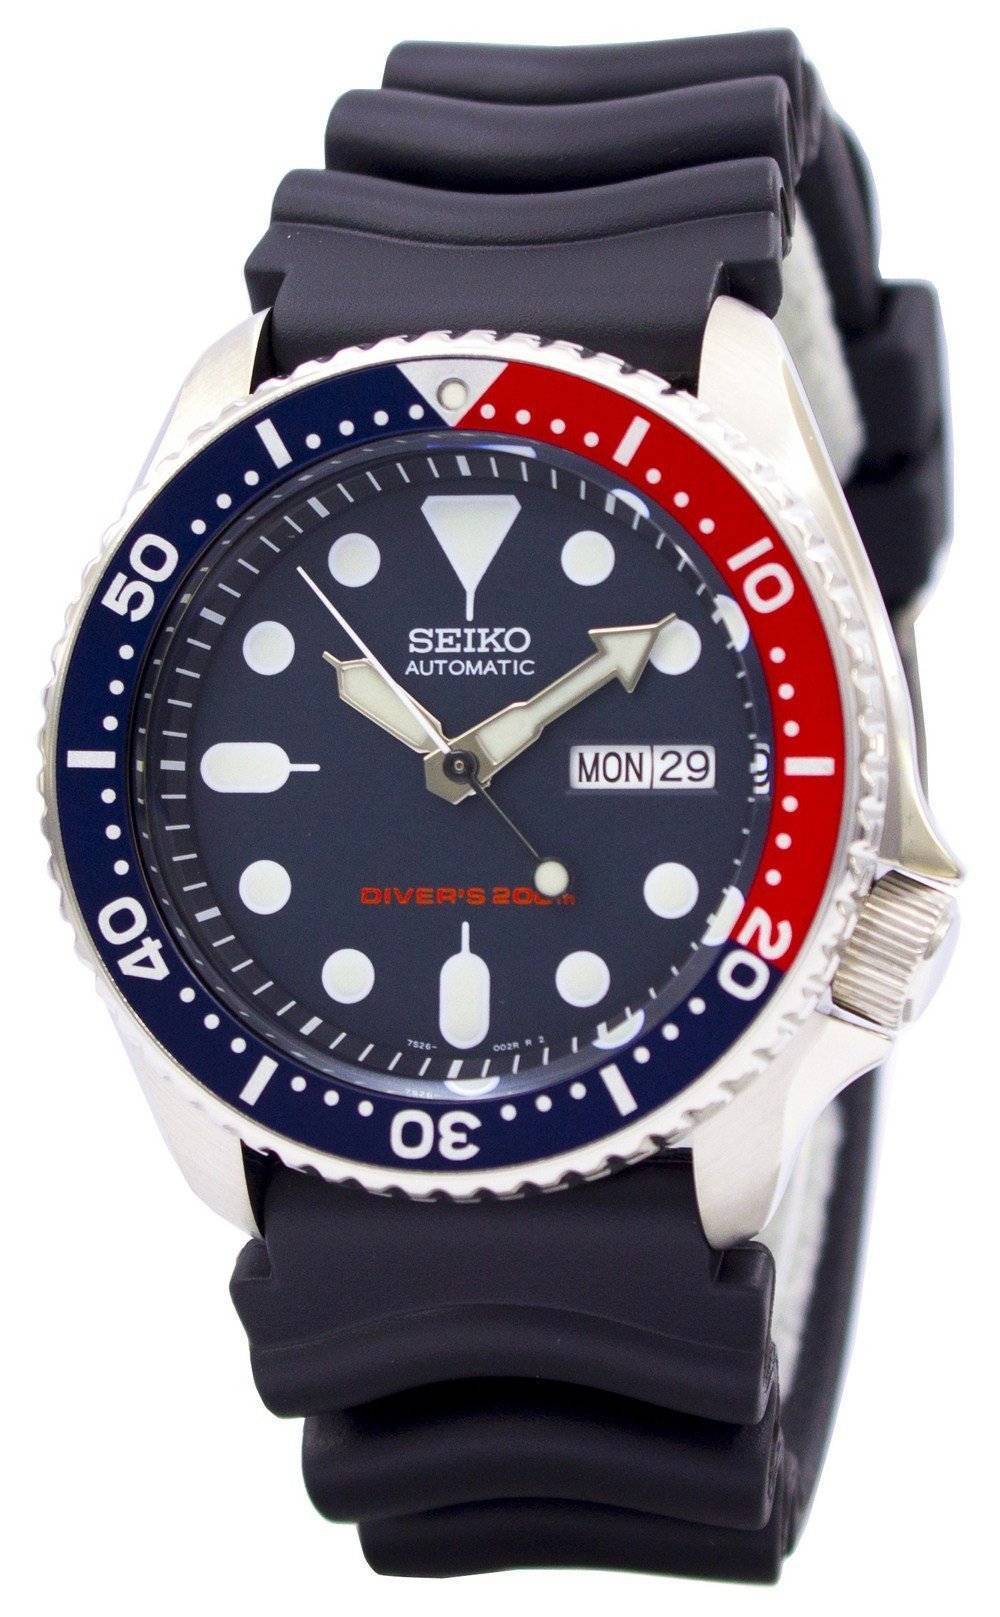 Seiko diver's automatic watch - Seiko divers watch seiko black monster Seiko  orange monster automatic diver watch.